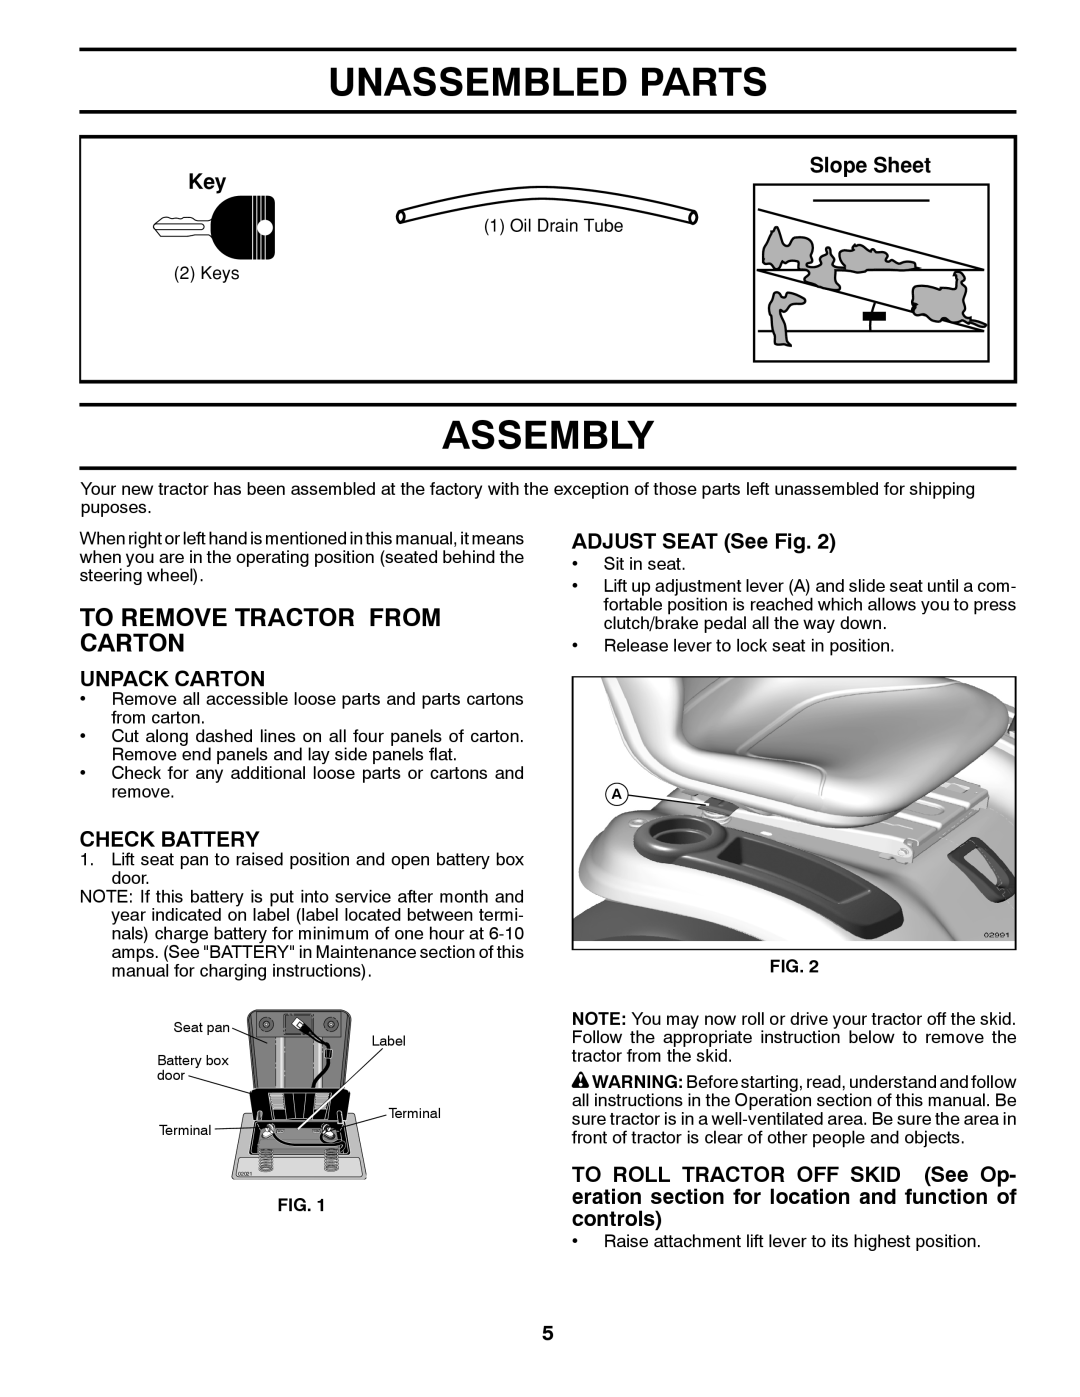 Husqvarna YTH20K46 owner manual Unassembled Parts, Assembly, To Remove Tractor From Carton, Slope Sheet Key, Unpack Carton 